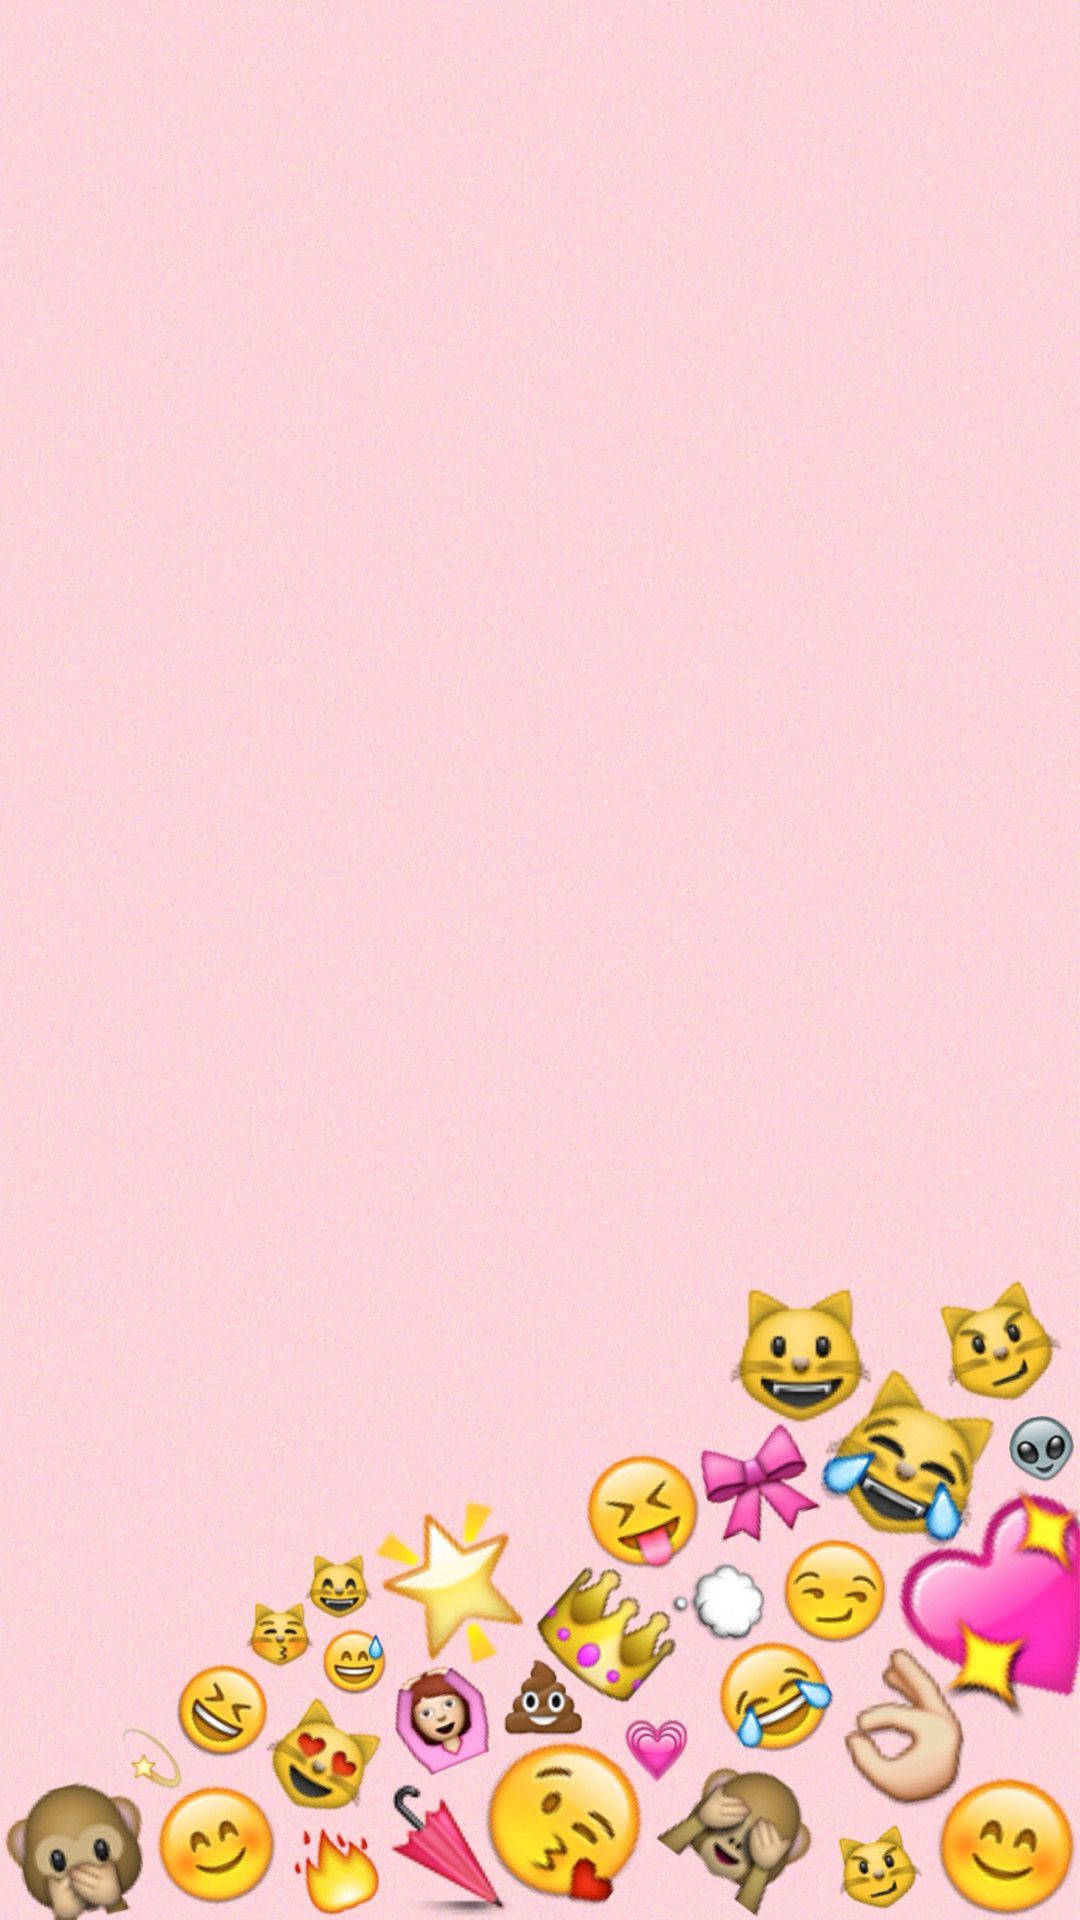 Cute Girly Emojis